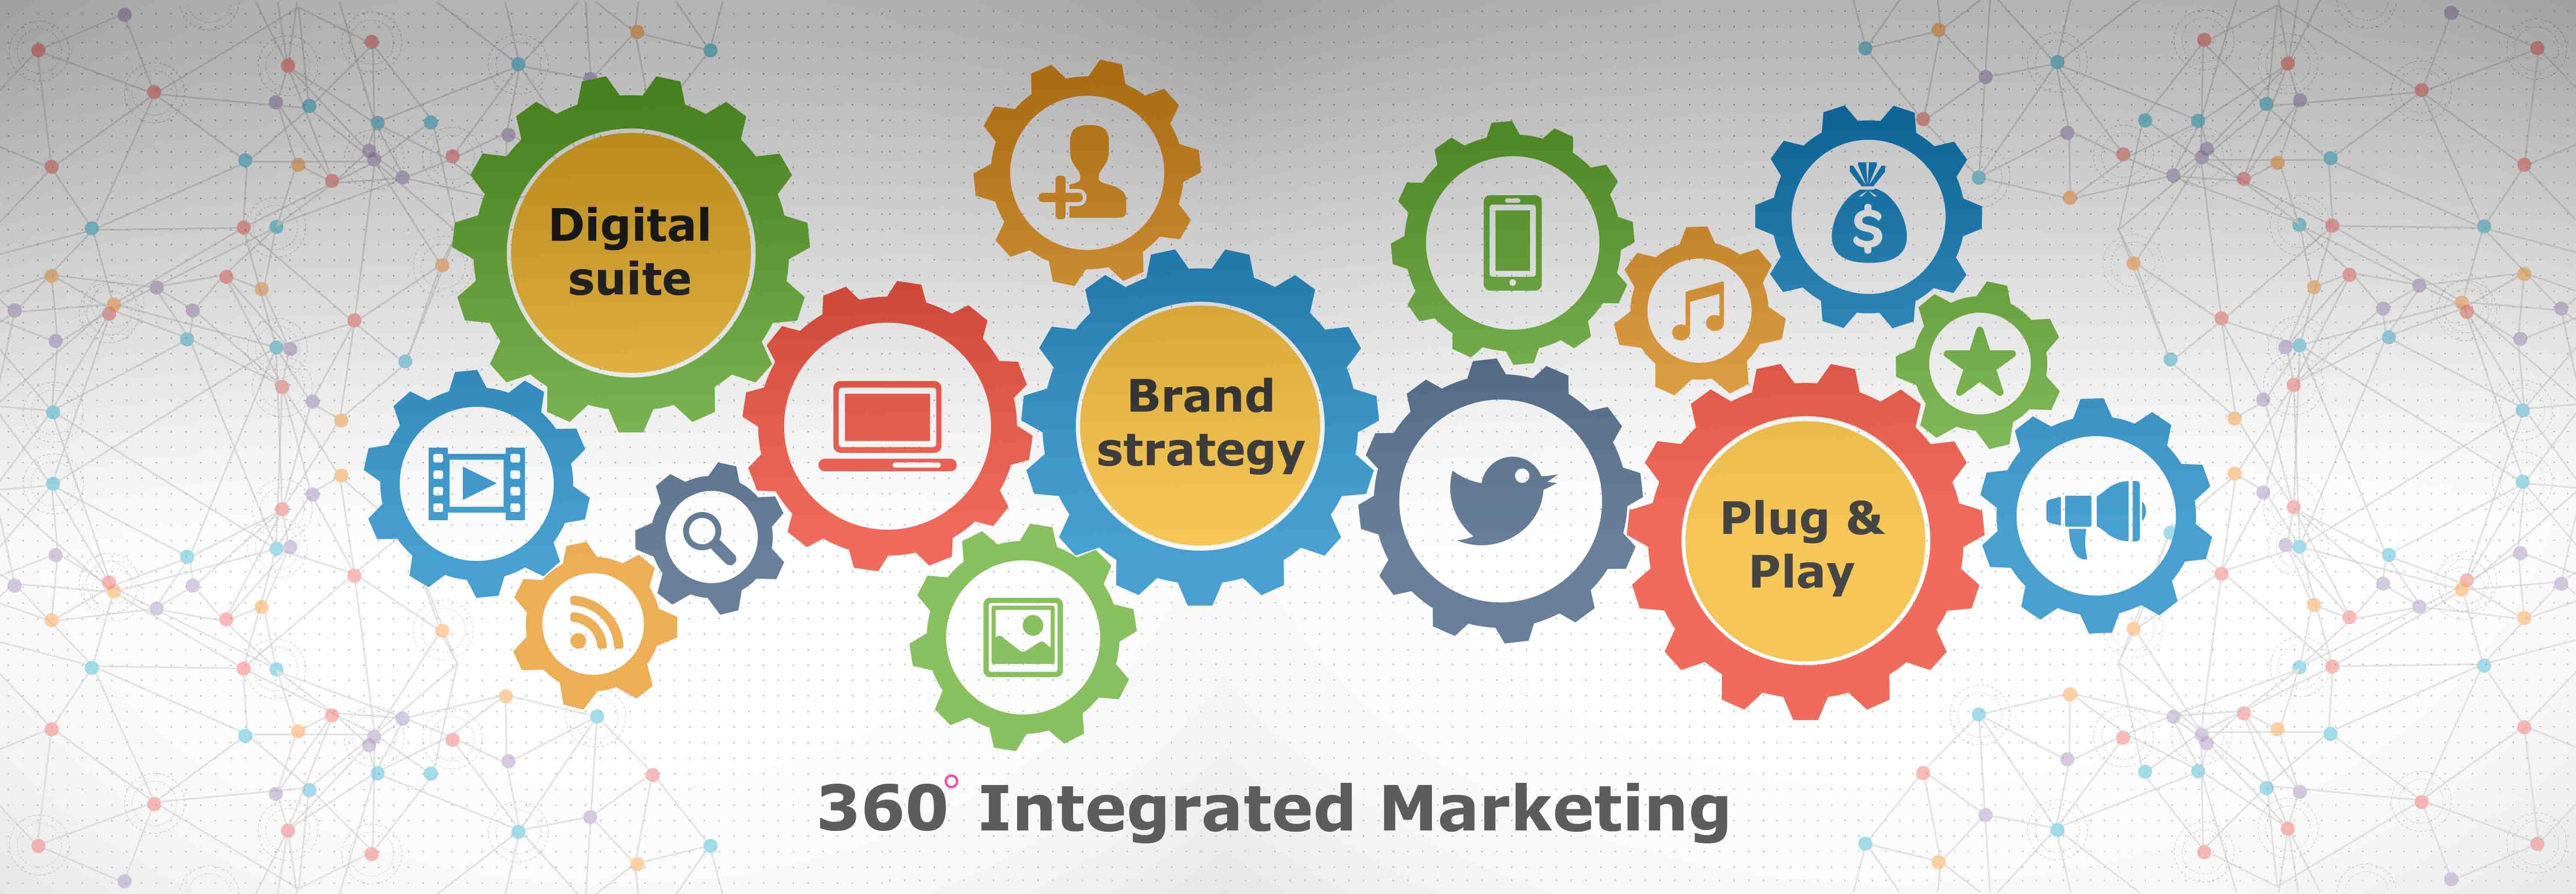 360IntegratedMarketingoption.jpg